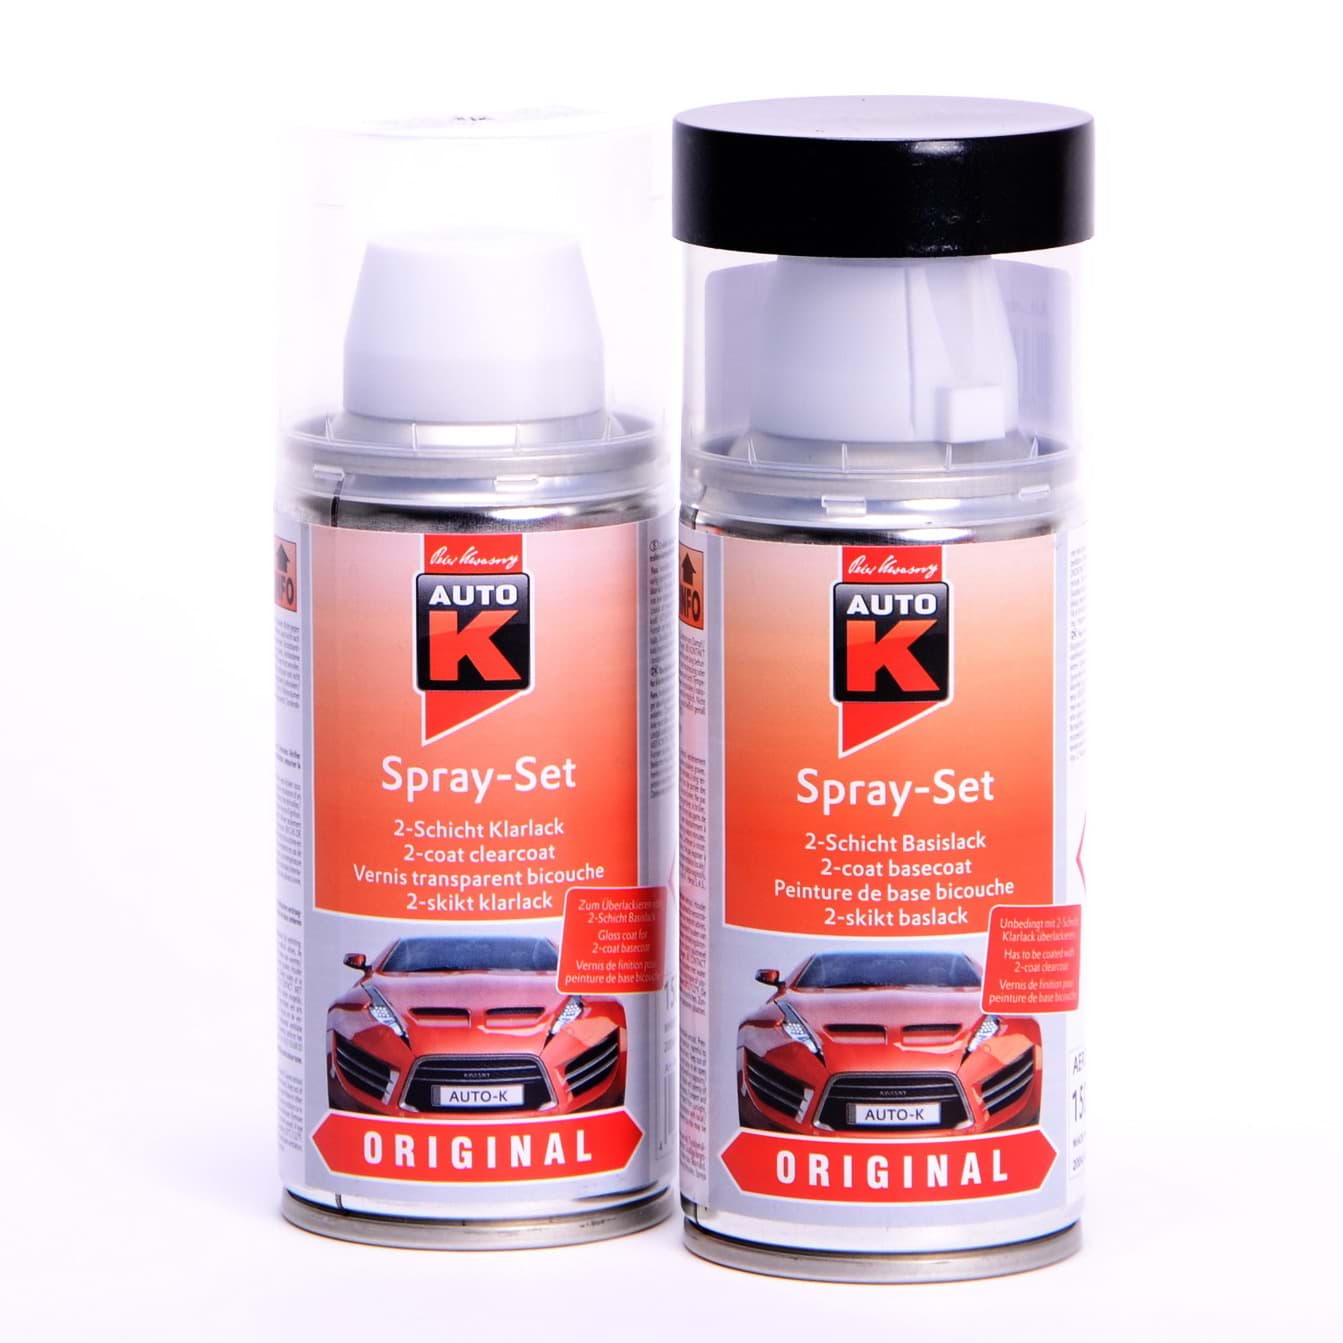 Afbeelding van Auto-K Spray-Set Autolack für Mercedes 197 Obsidianschwarz met 23326